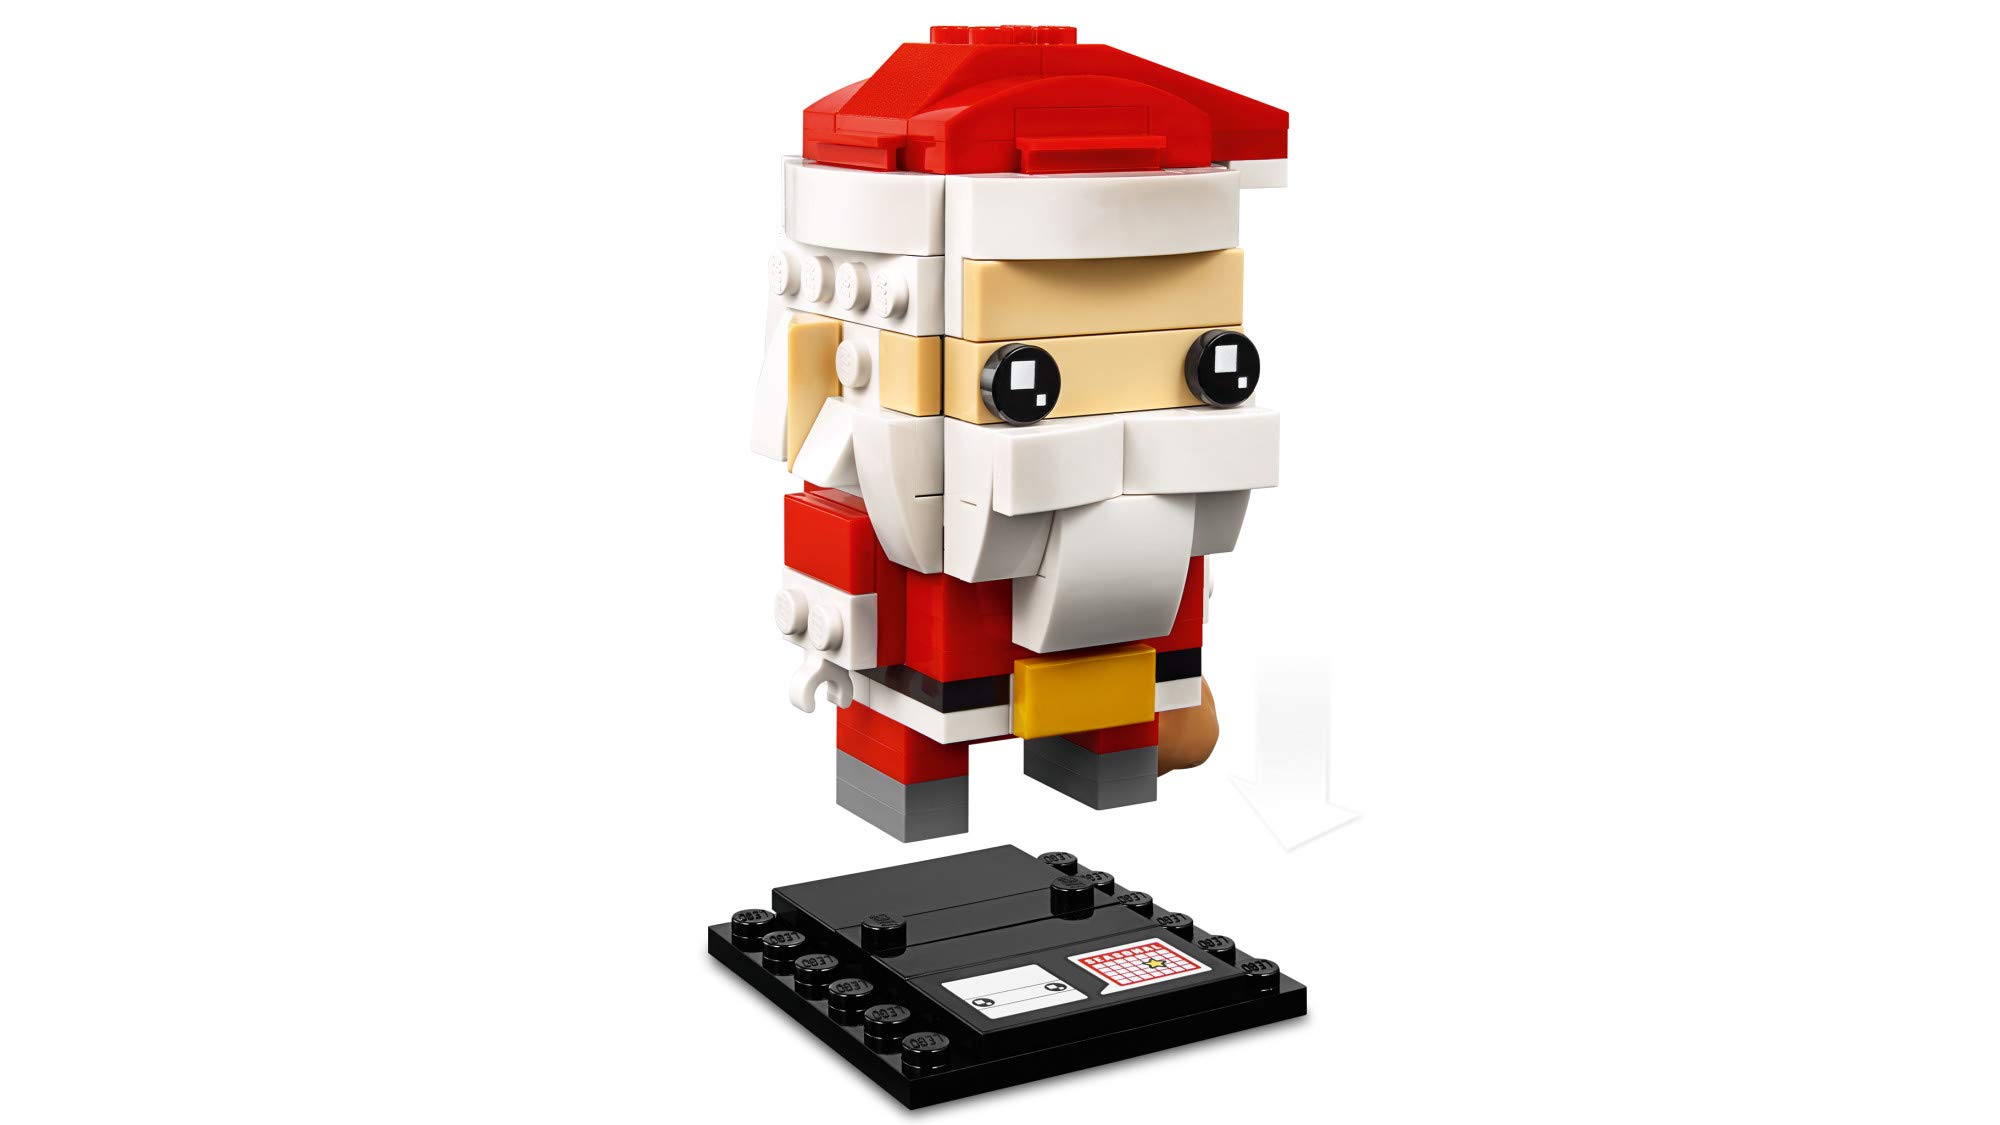 LEGO BrickHeadz Mr. & Mrs. Claus 40274 Building Kit (341 Pieces) (Discontinued by Manufacturer)